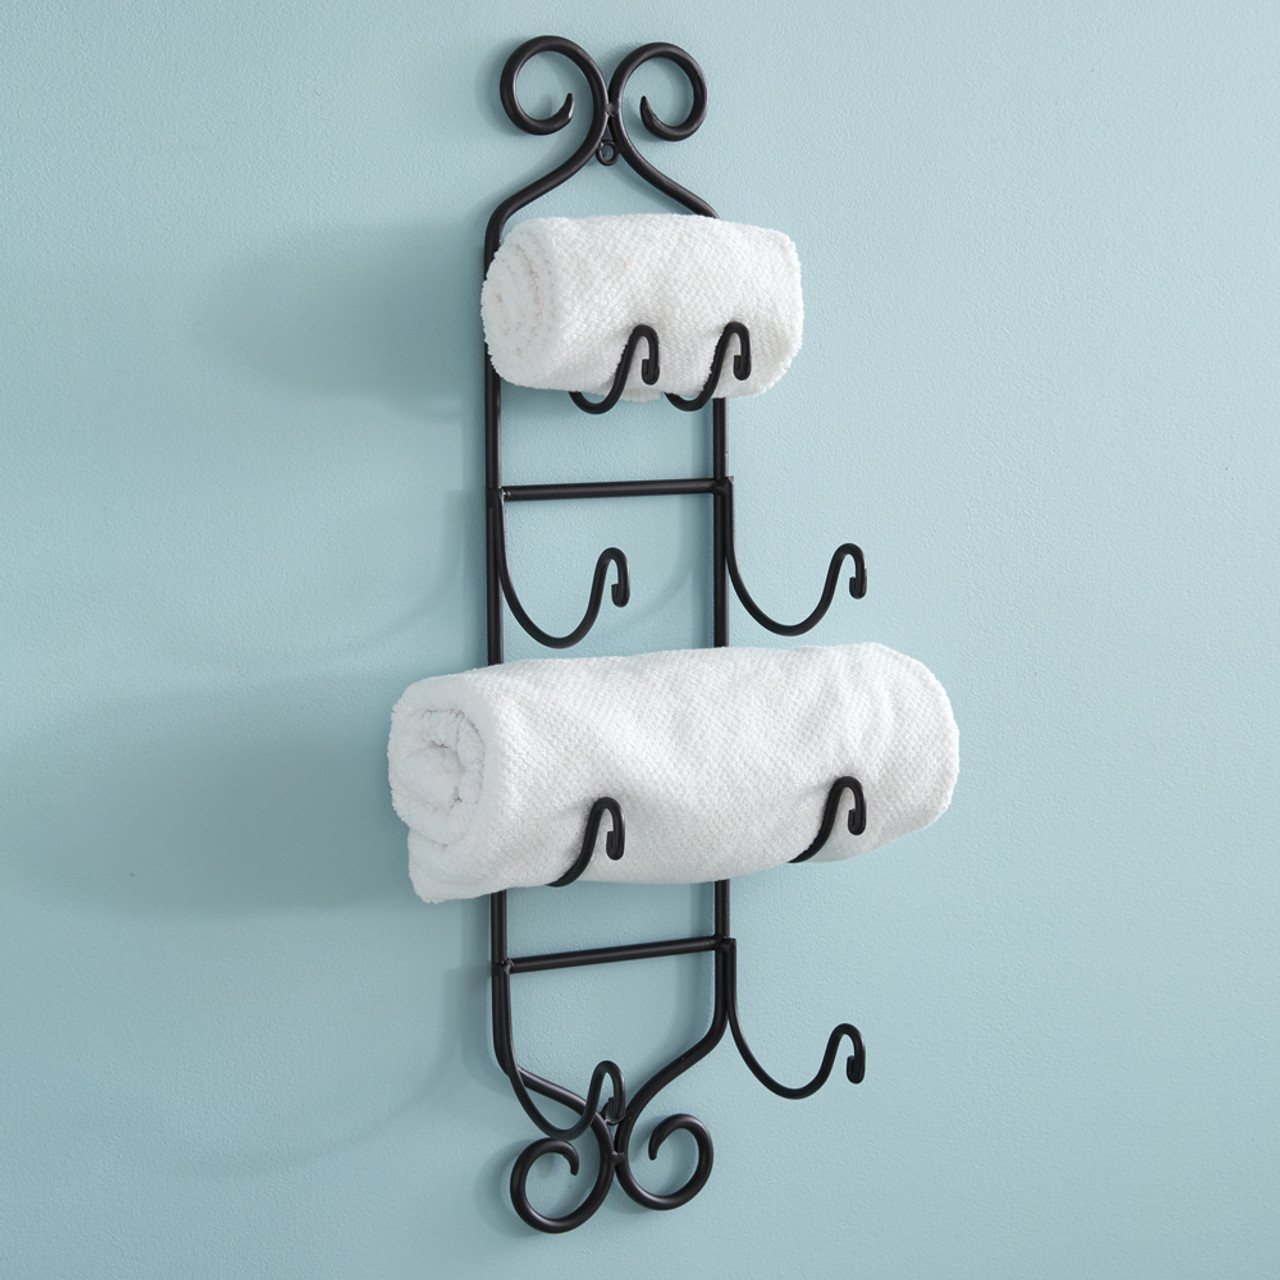 Small Black Adirondack Metal Wall Towel Rack Towel Holder Bathroom